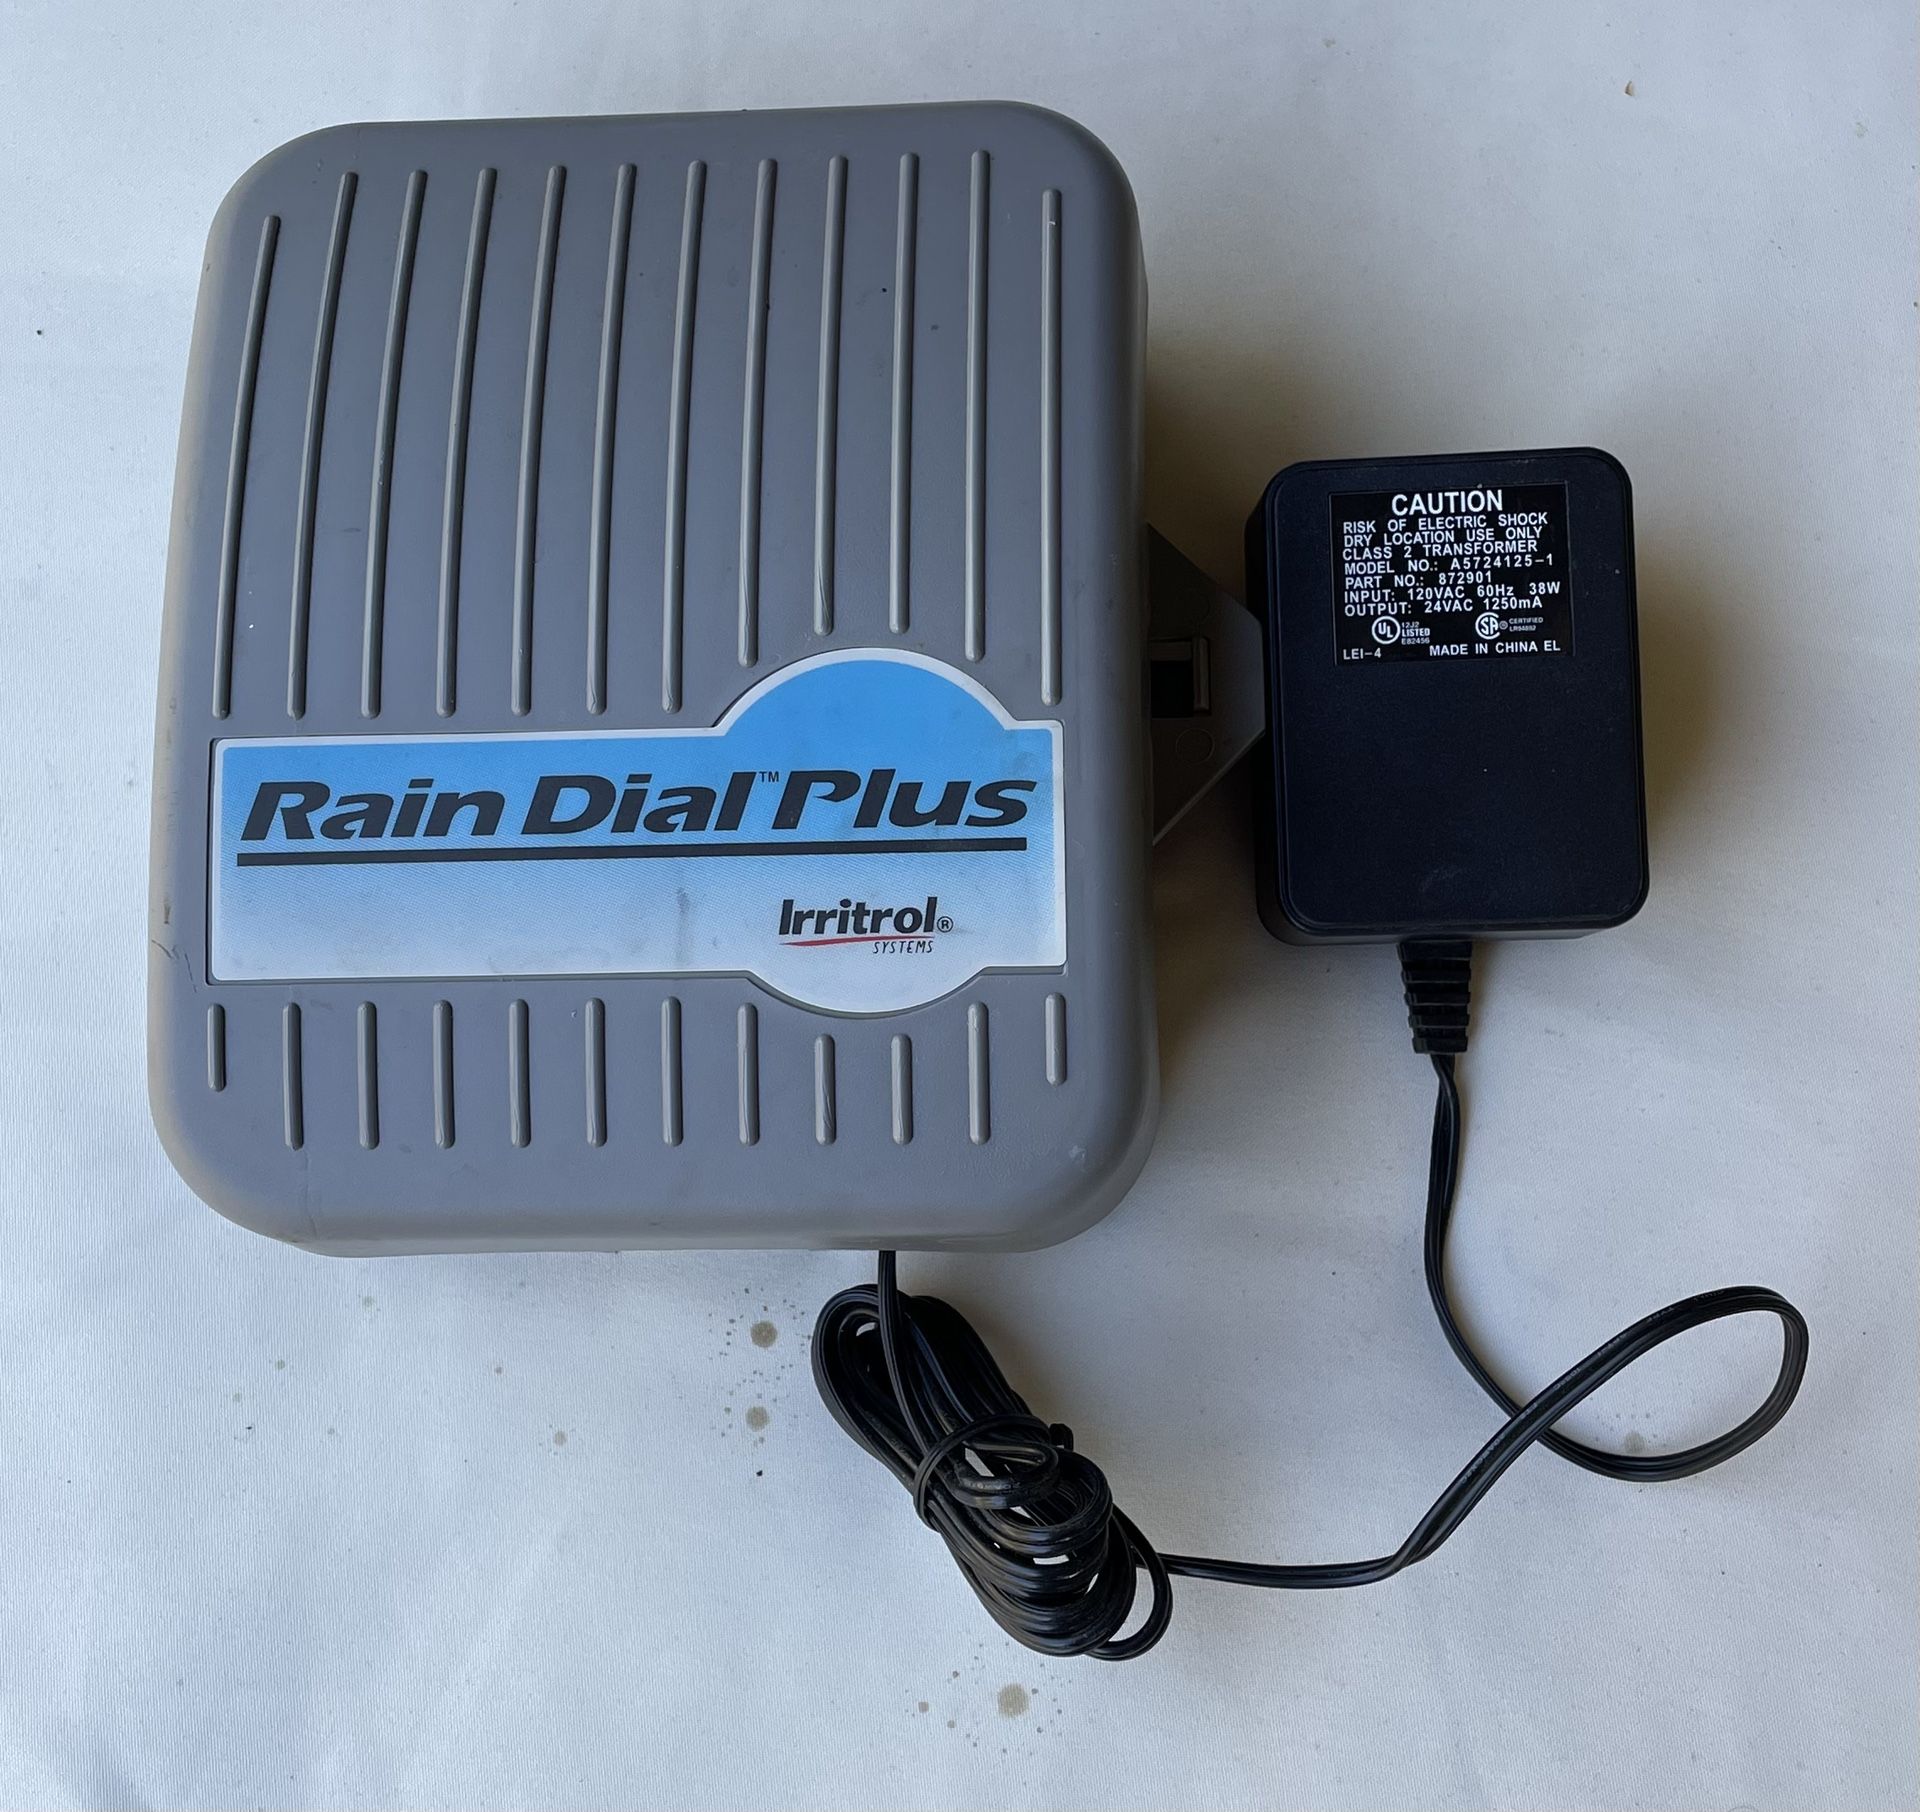 Rain Dial Plus - 12 Zone Irrigation Controller